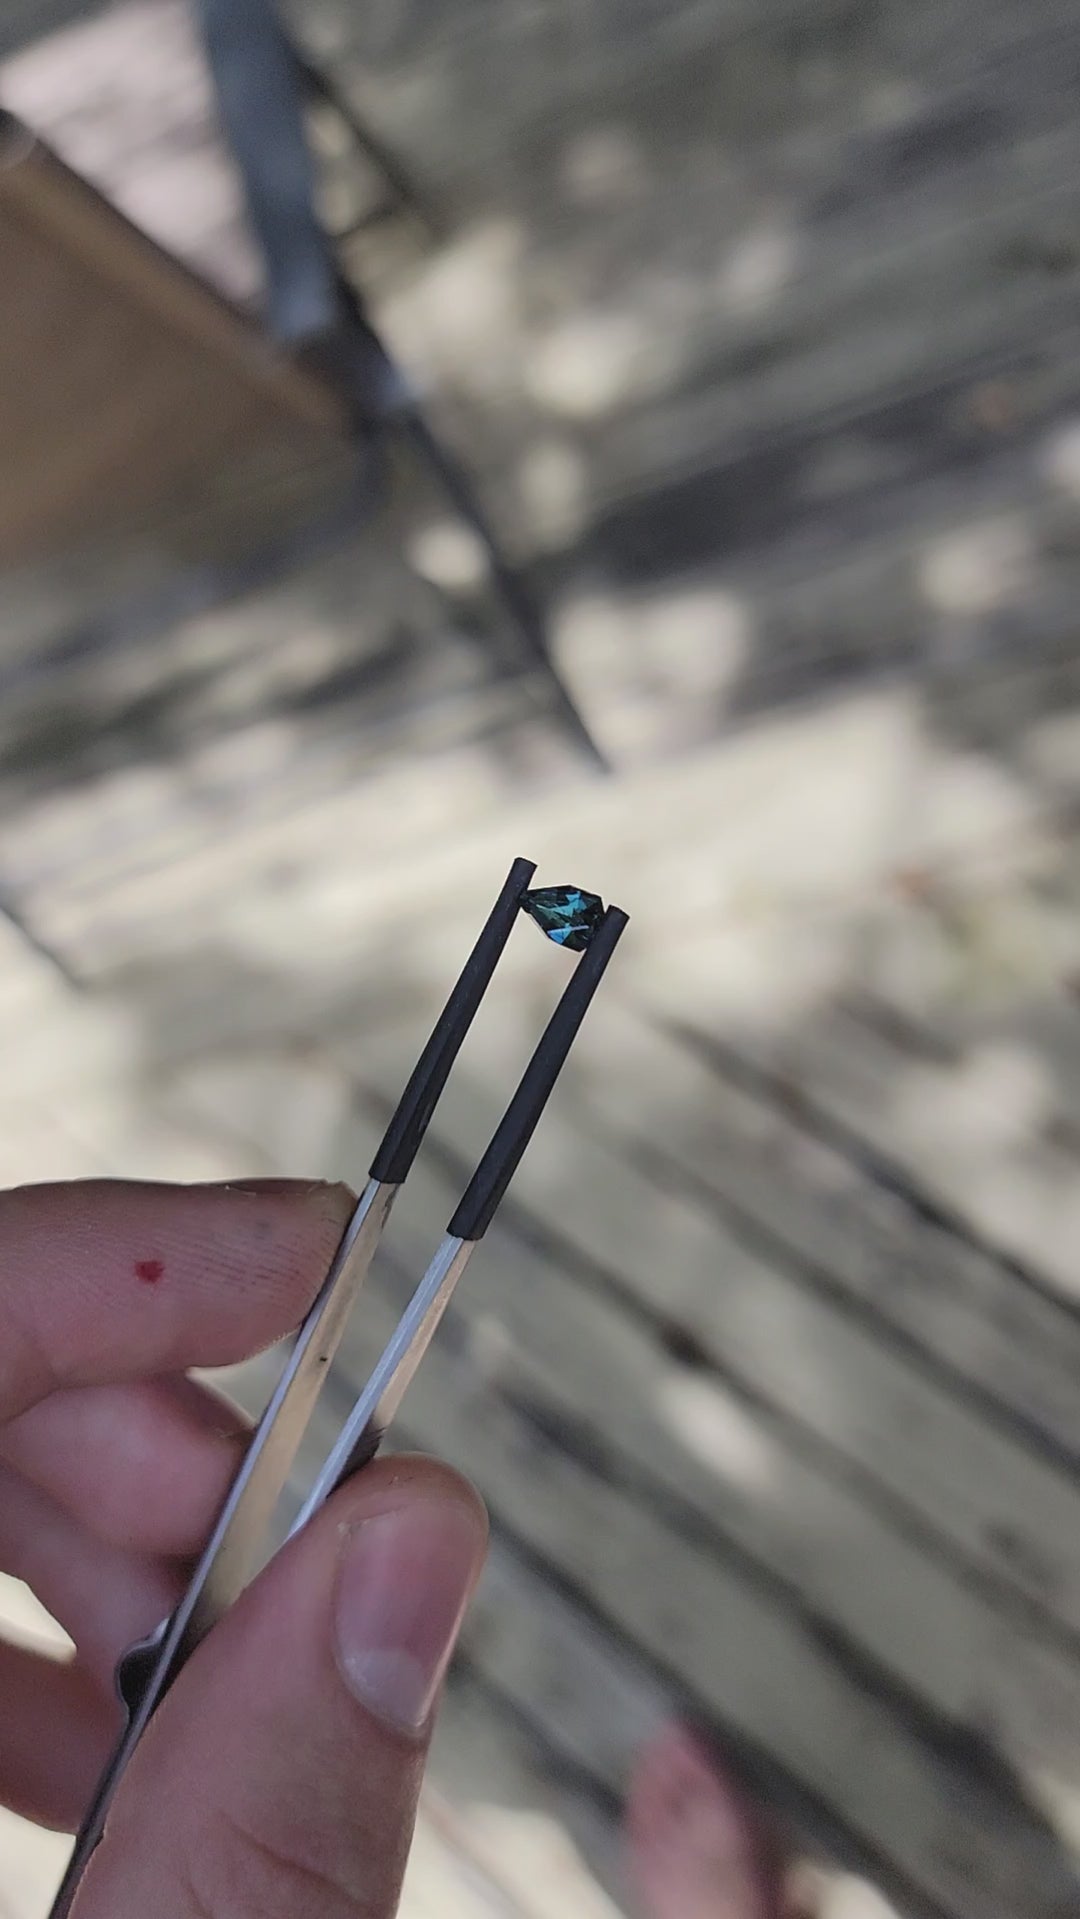 (Less Than Perfect) 1.1 carat Bluish Green Sapphire Kite - 7.3x4.7mm